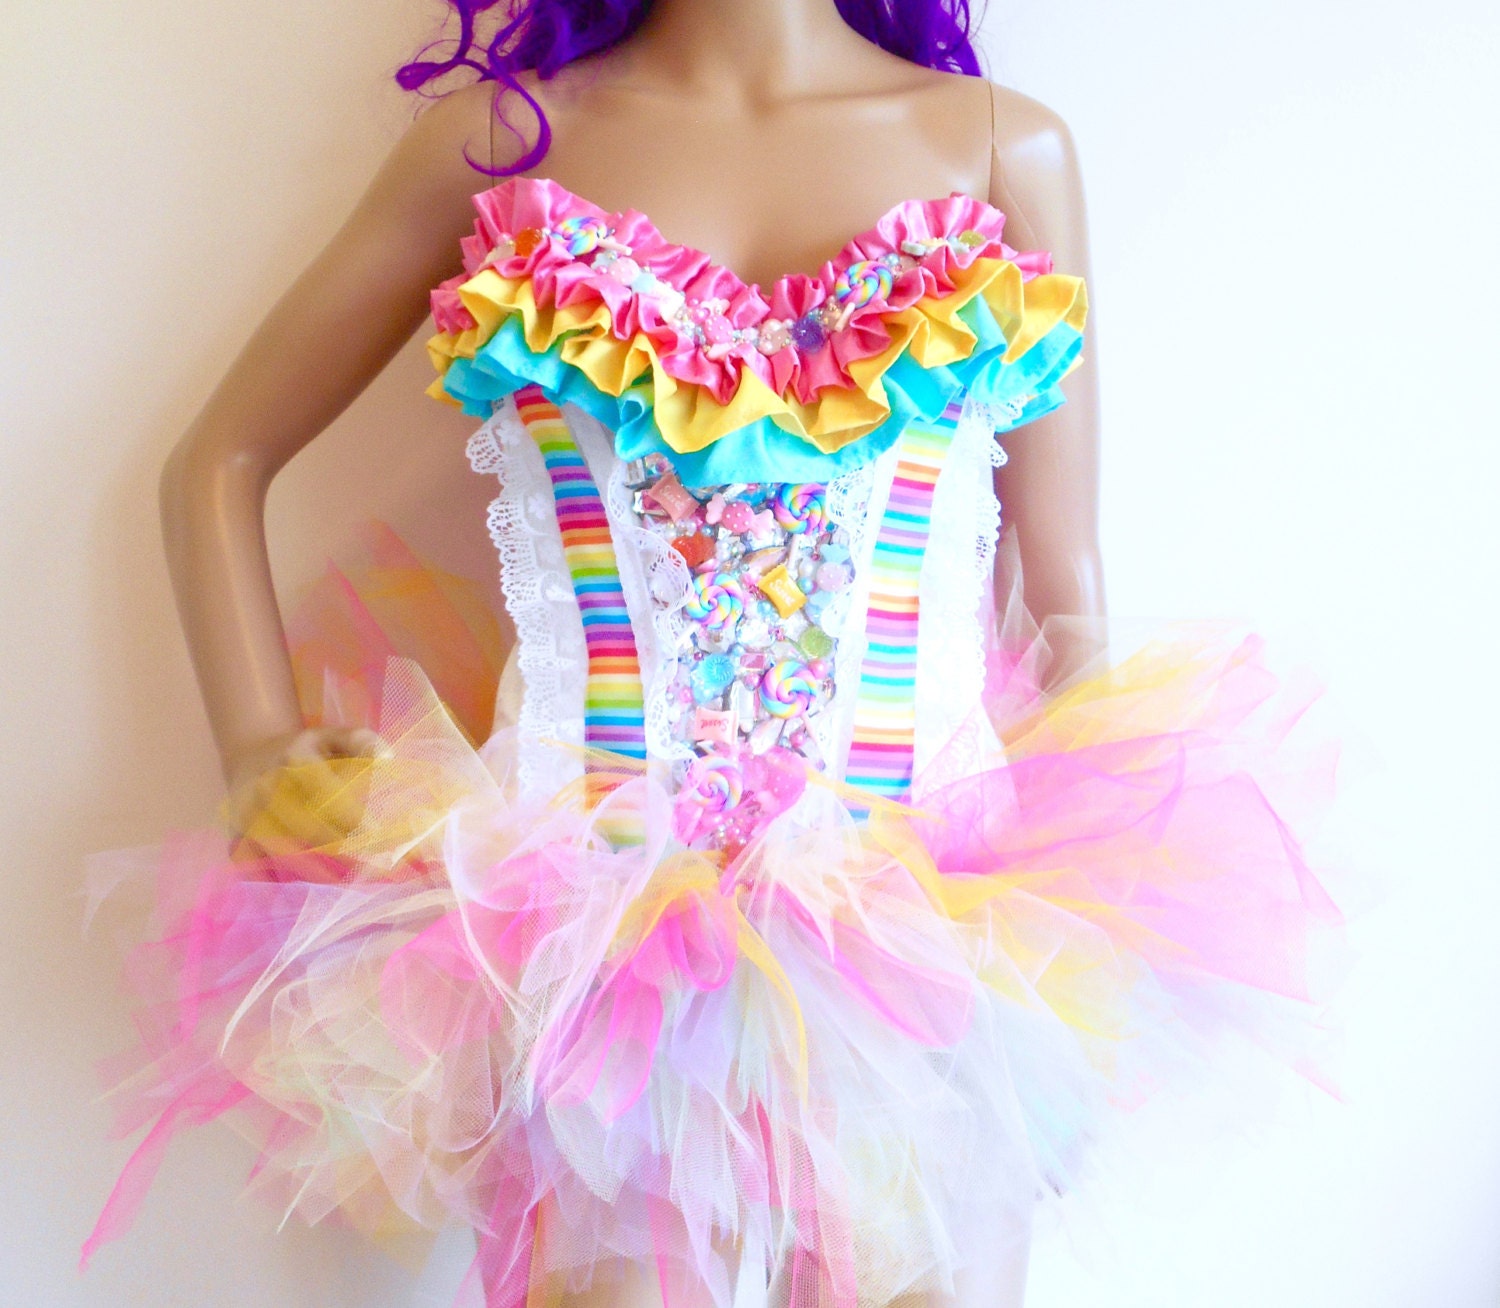 Rainbow Candy Land Corset Costume Rave Bra Edc By Electricenvyco